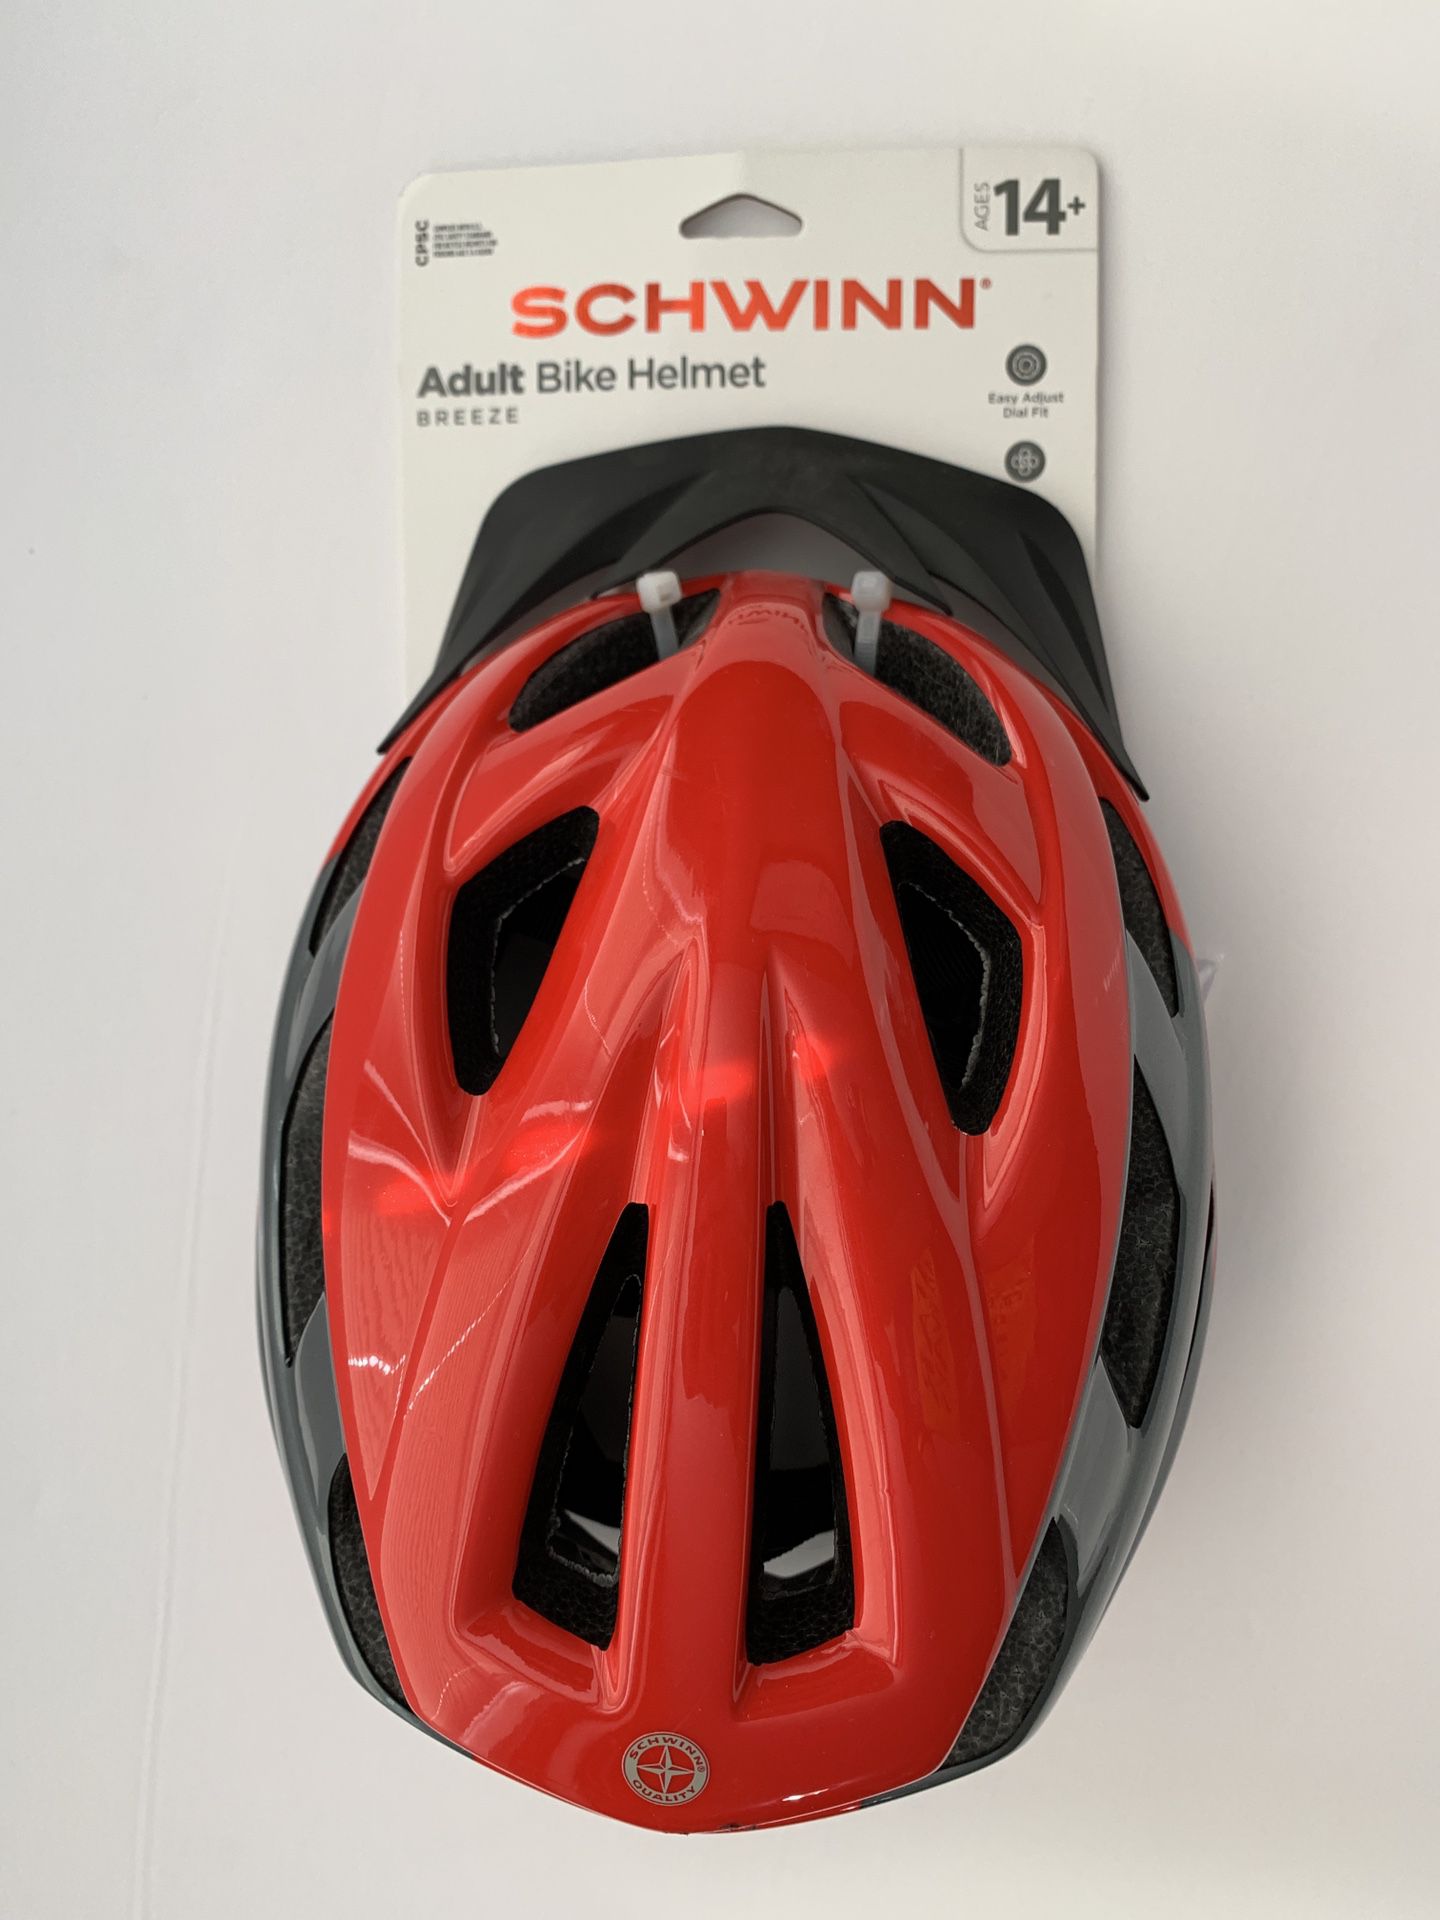 Schwinn Breeze Adult Bike helmet.